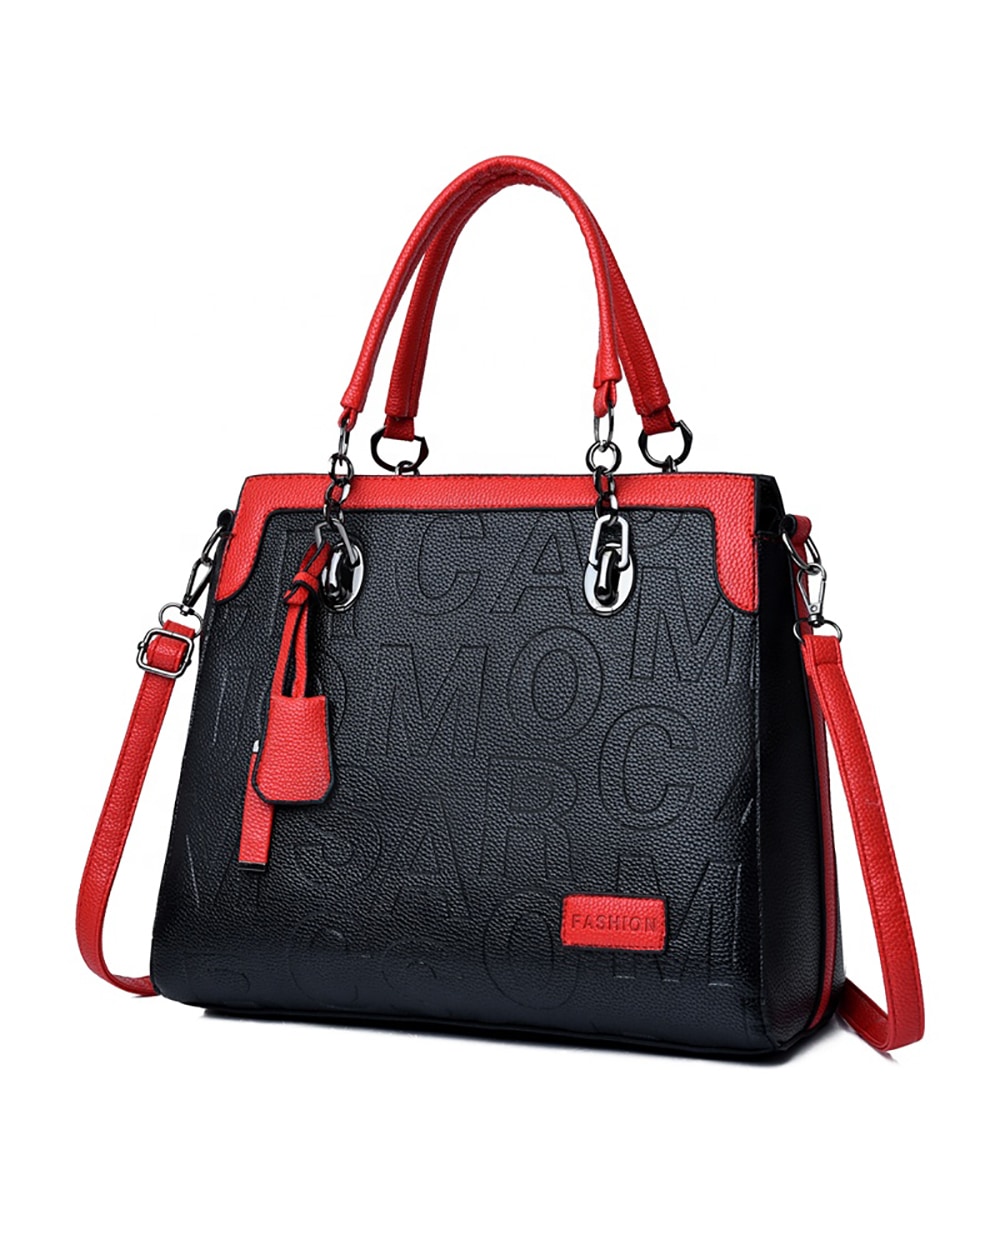 black red ladies handbag